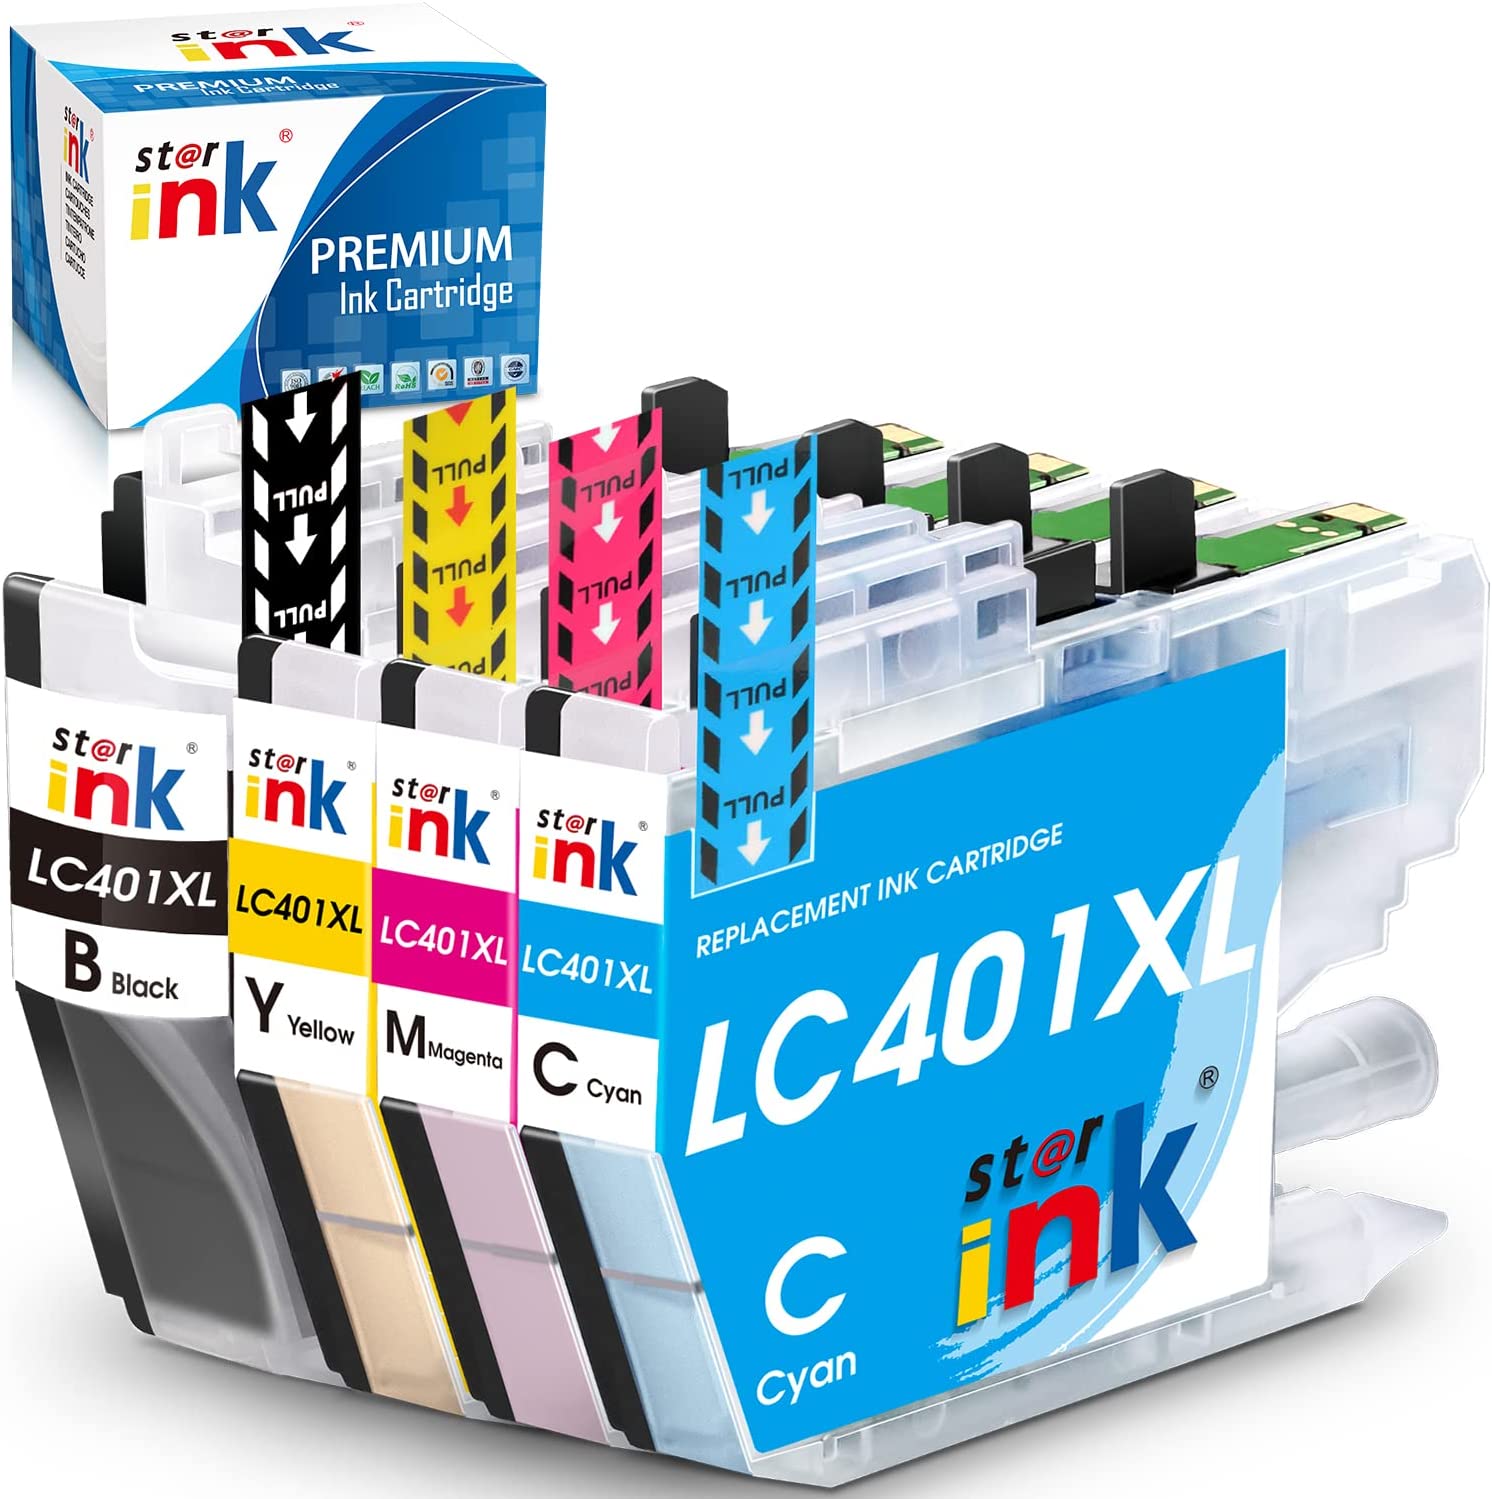 LC401XL Ink Cartridges Compatible Brother Printer Starink 4 Packs - Linford Office:Printer Ink & Toner Cartridge